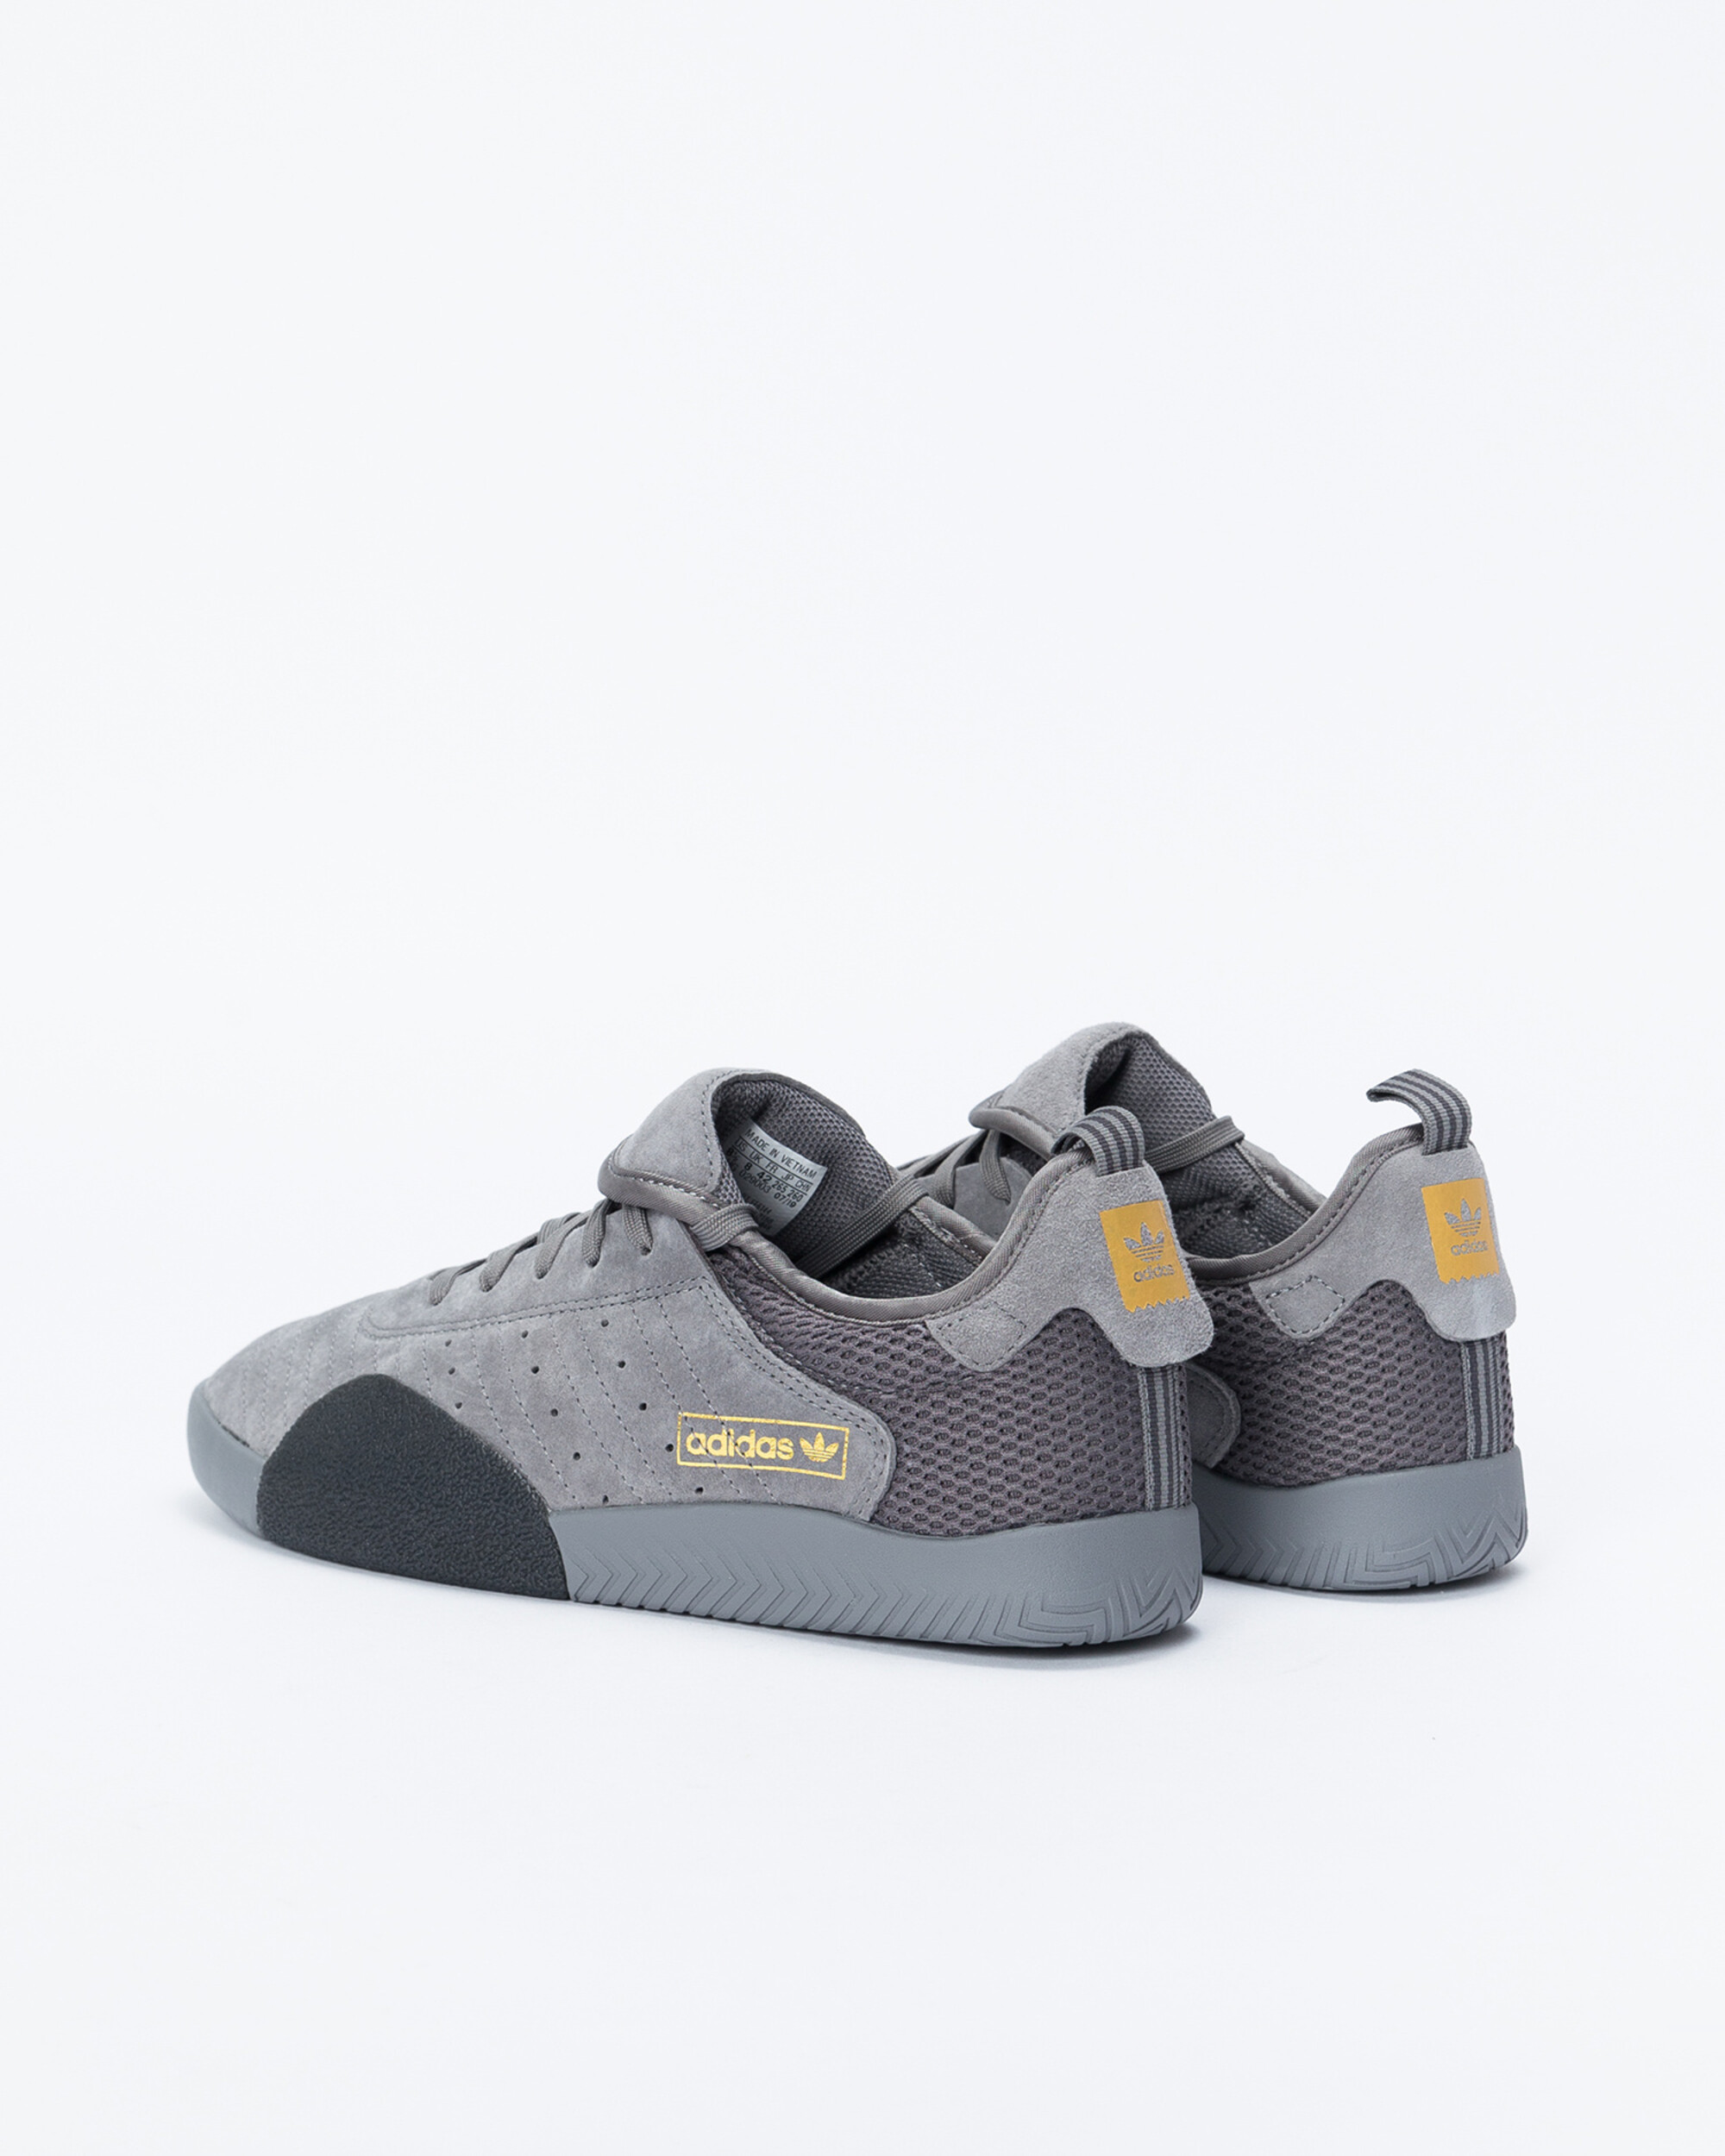 Adidas 3st.003 Grey Four / Carbon / Gold Metallic